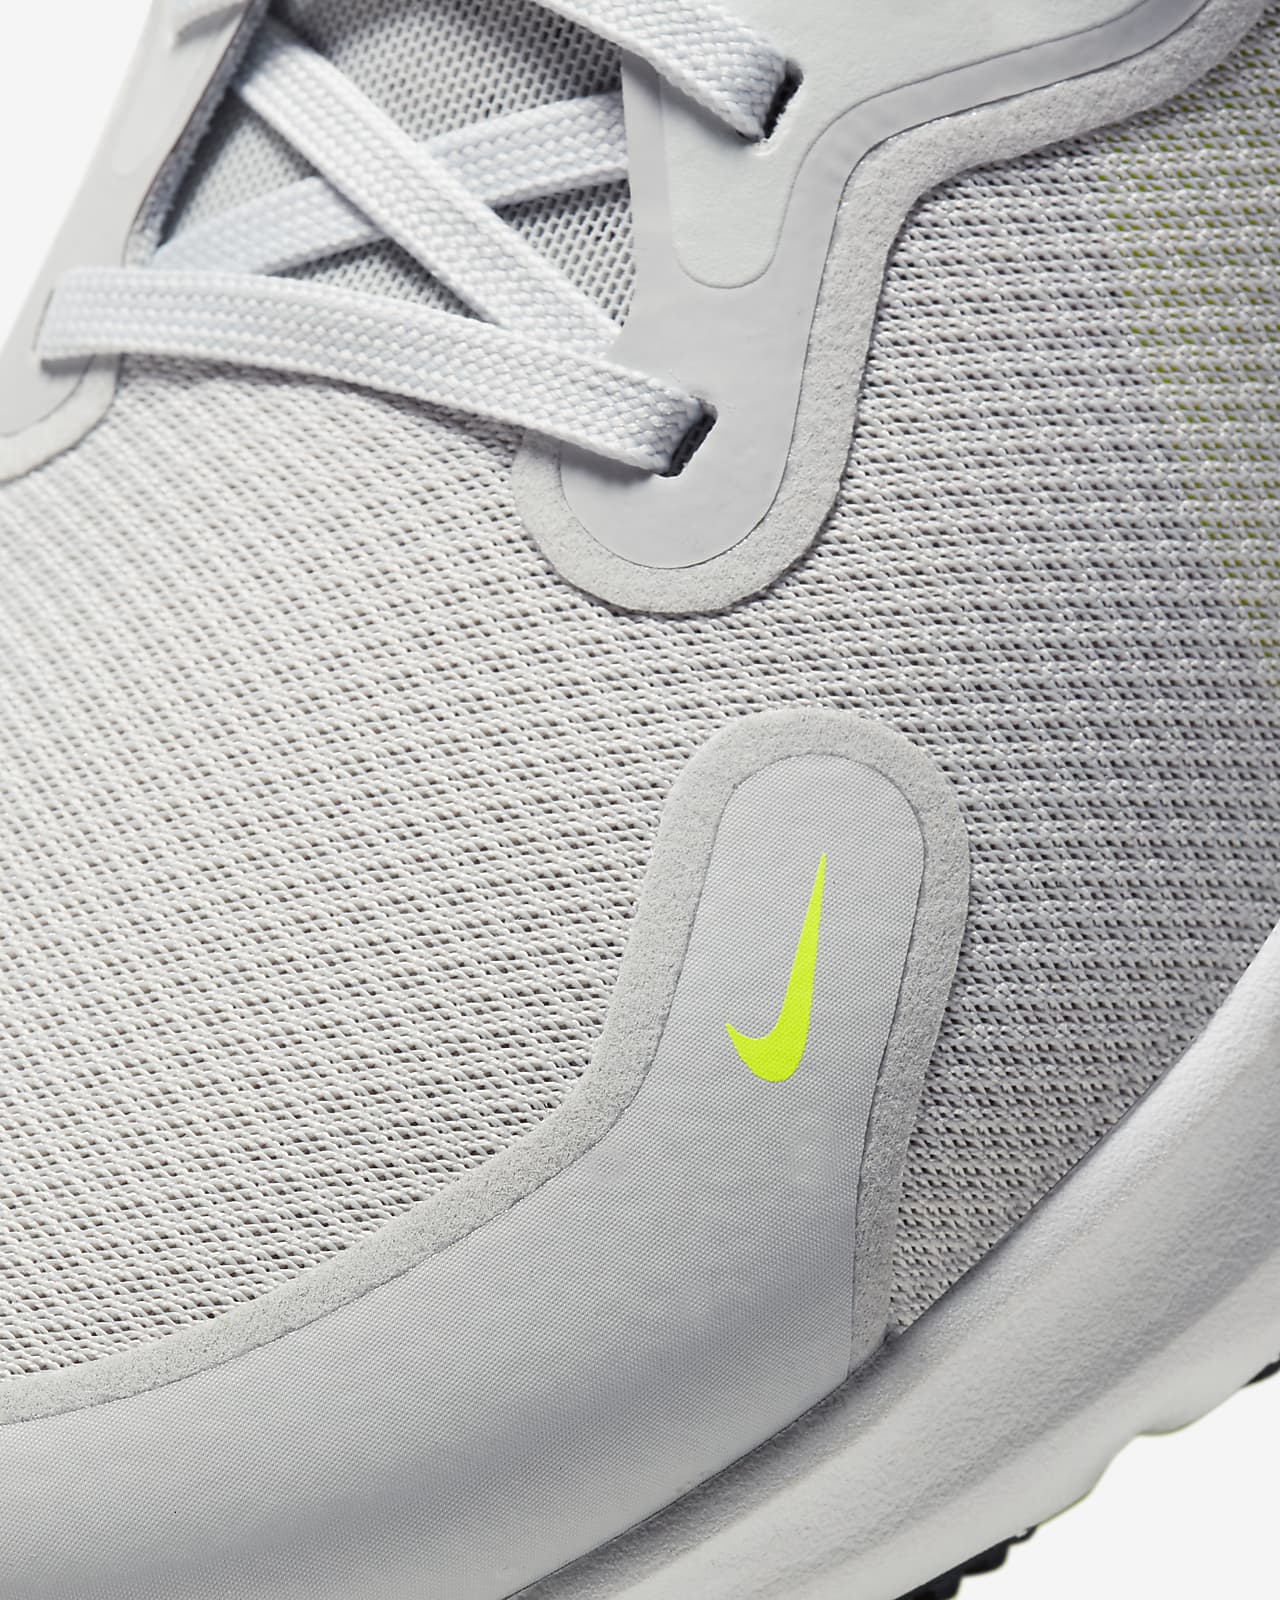 Calzado de running para carretera para hombre Nike React Miler رسم بطاقة تهنئة